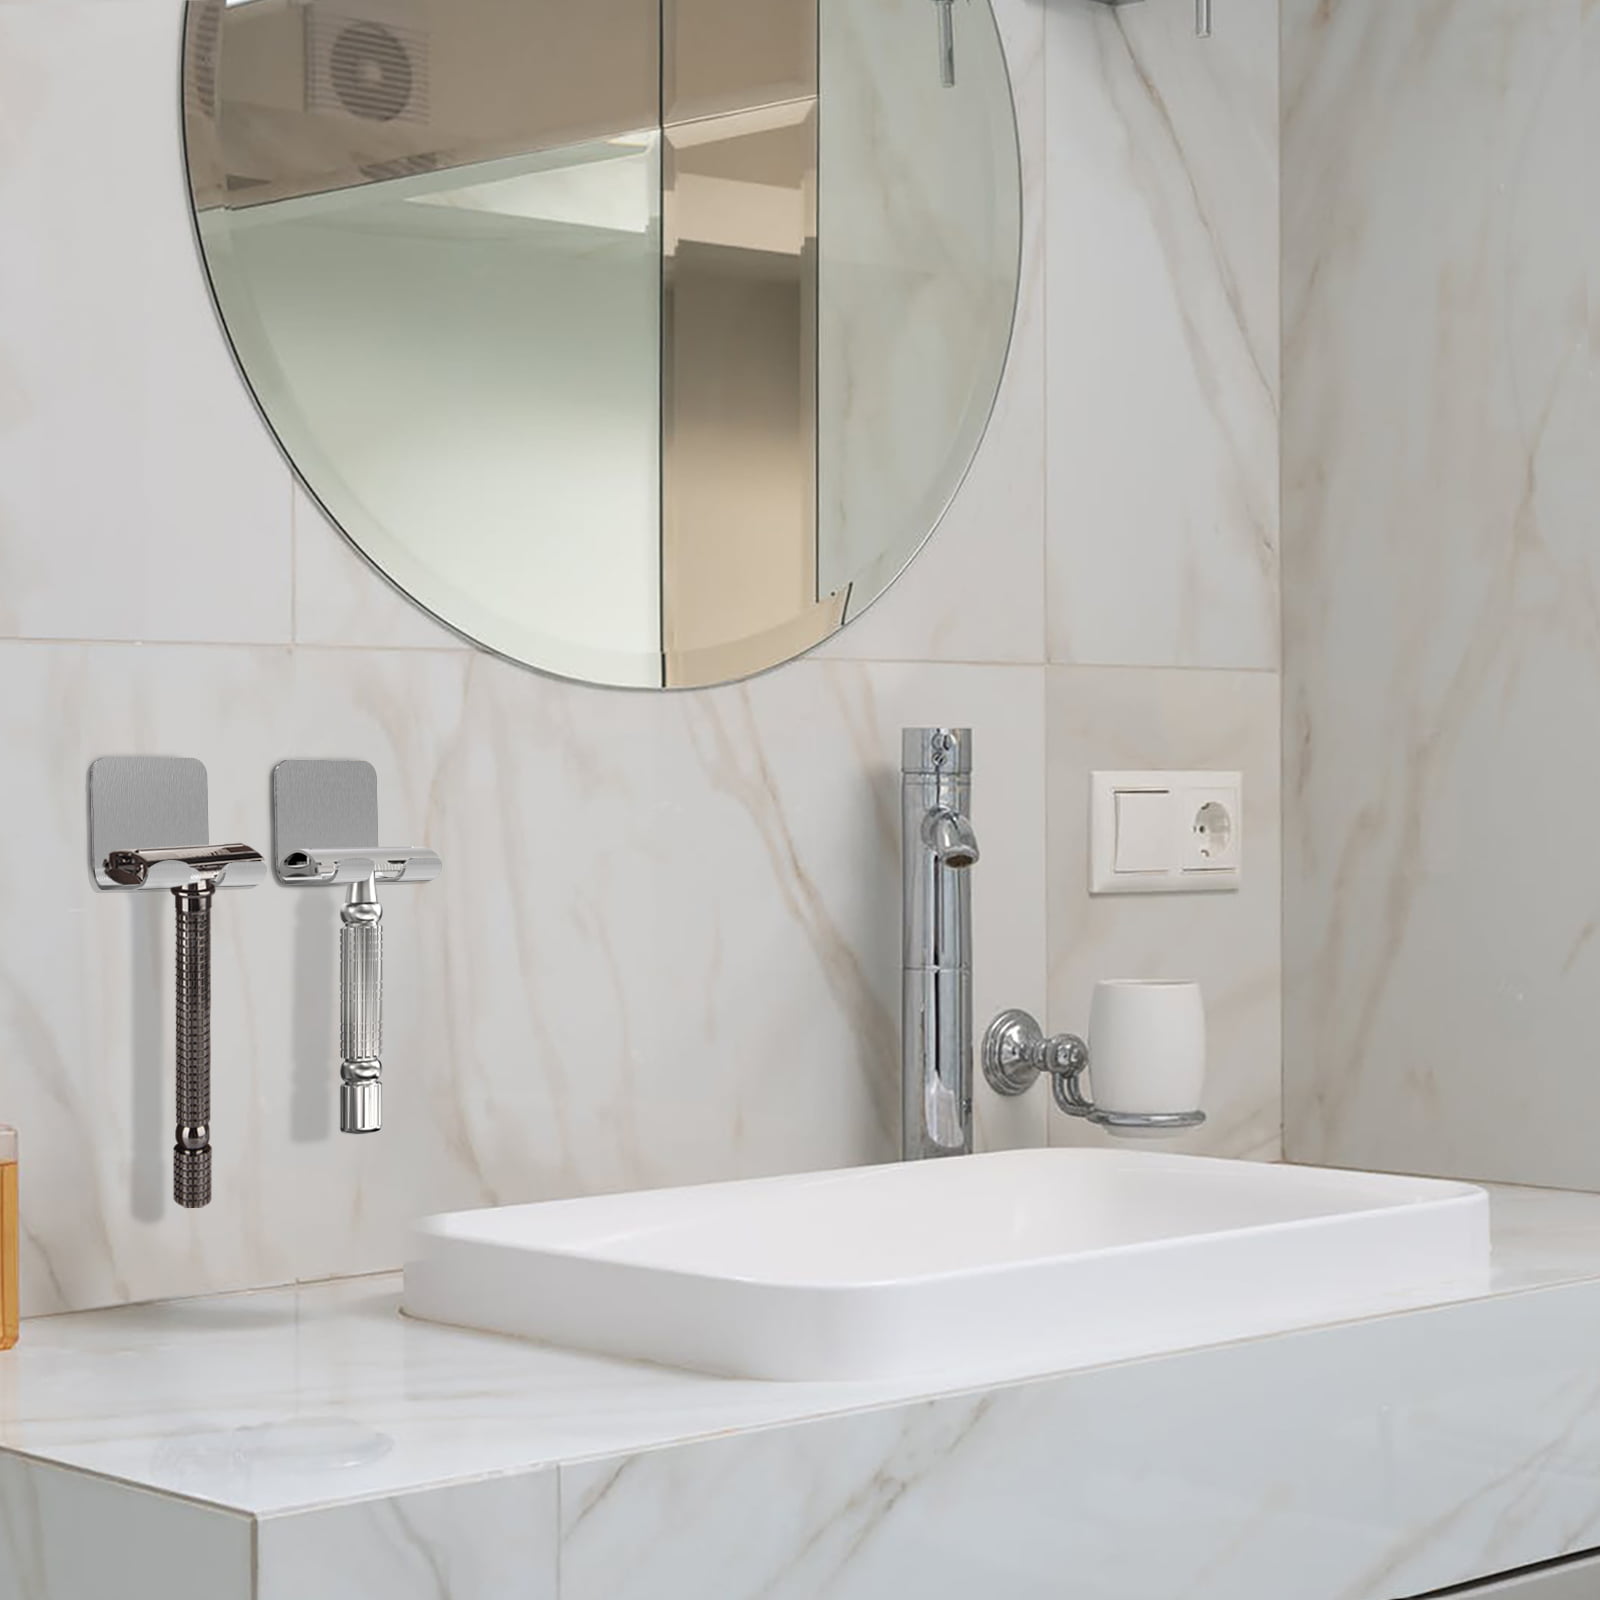 ABINLIN Razor Holder for Shower Wall 4 Pack, Stainless Steel Razor Hanger  for Shower, Waterproof Self-Adhesive Towel Hooks for Bathrooms (Silver)